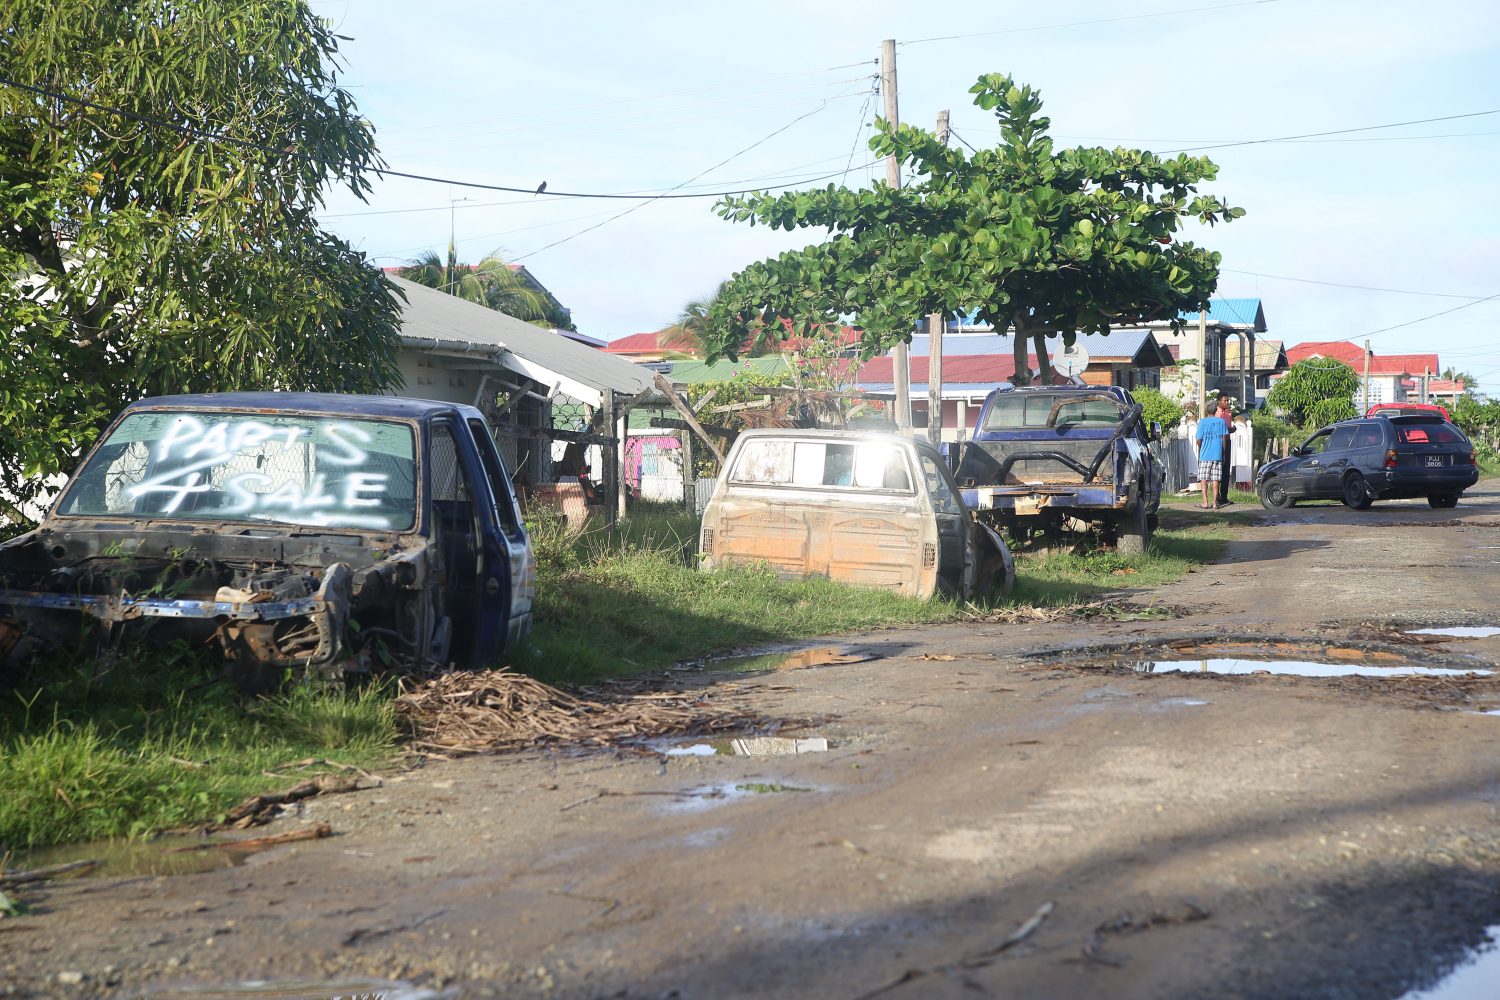 Some of the vehicles along a potholed road in Cornelia Ida (Terrence Thompson photo)